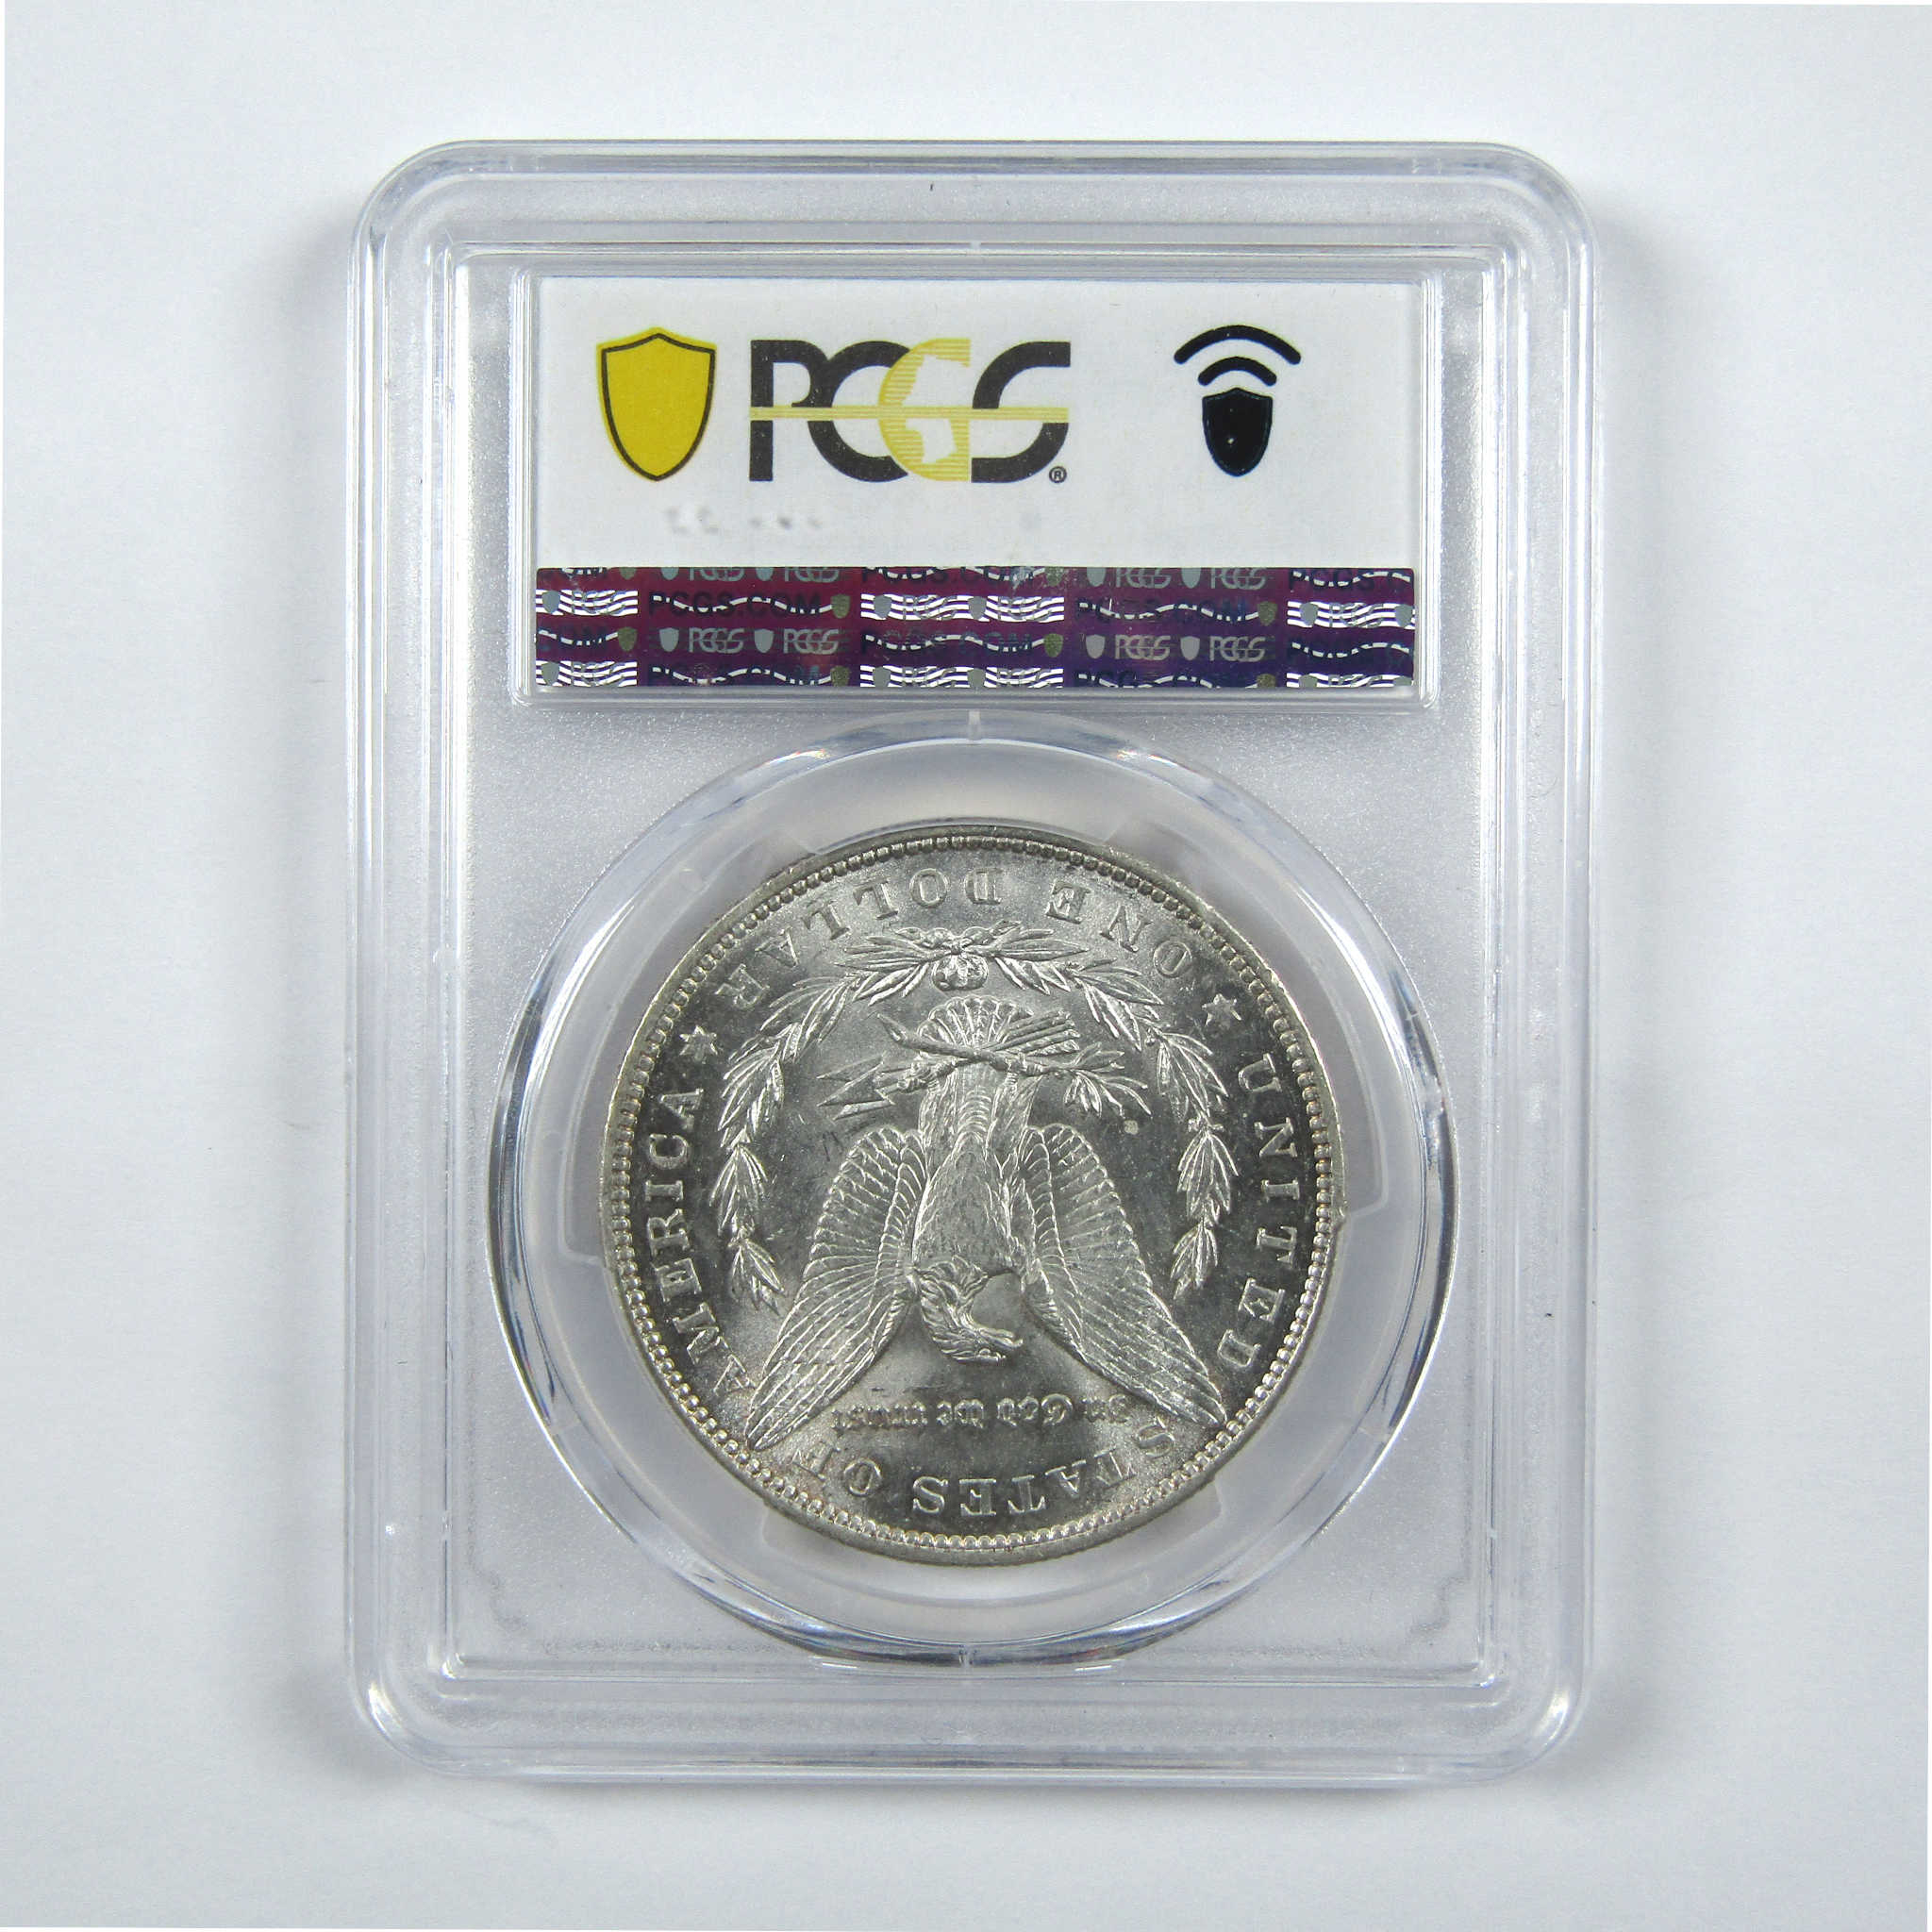 1878 7TF Rev 79 Morgan Dollar AU 58 PCGS Silver $1 Coin SKU:I11788 - Morgan coin - Morgan silver dollar - Morgan silver dollar for sale - Profile Coins &amp; Collectibles